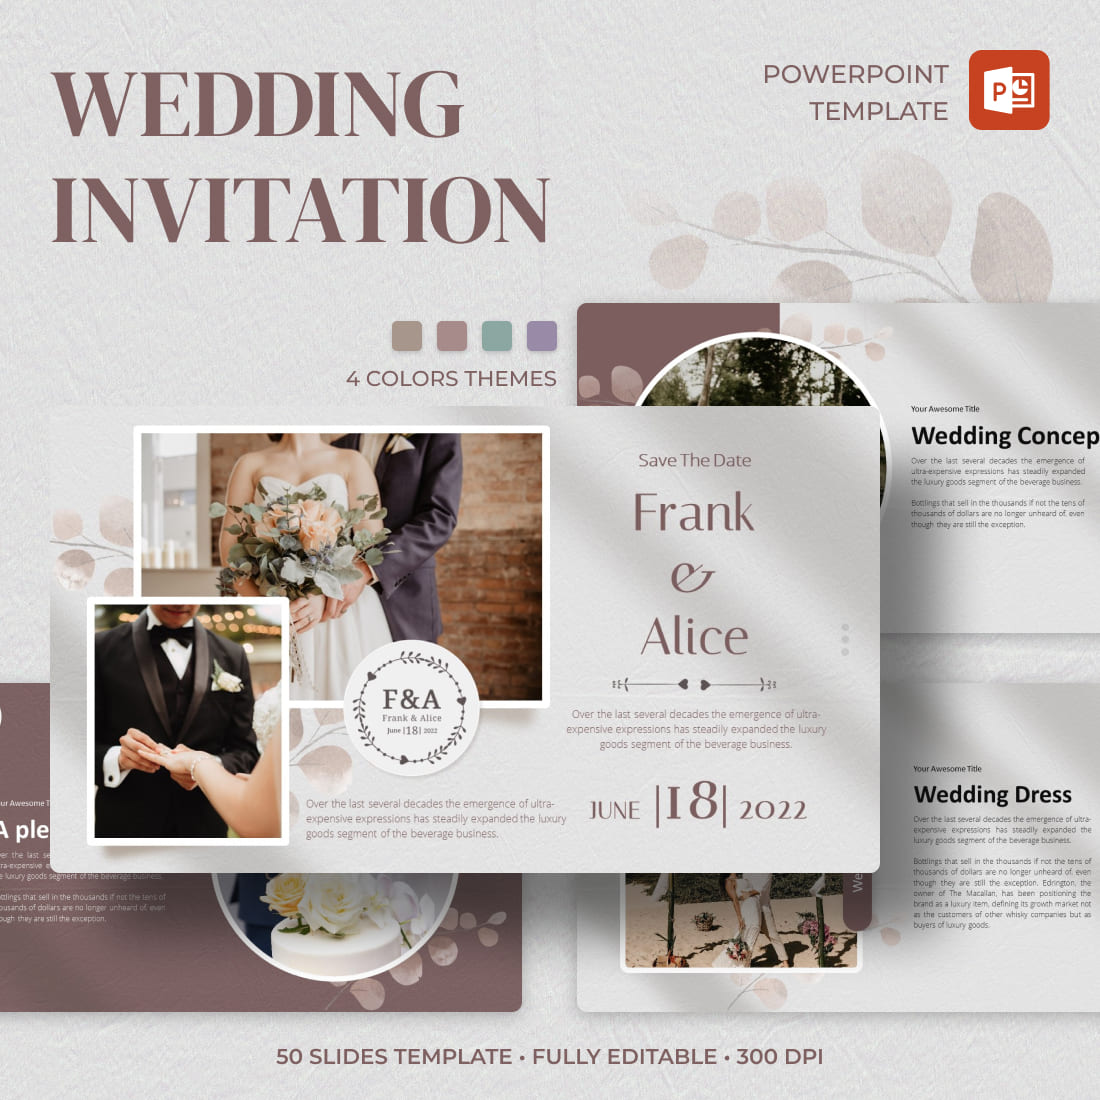 Wedding Invitation Powerpoint Template.